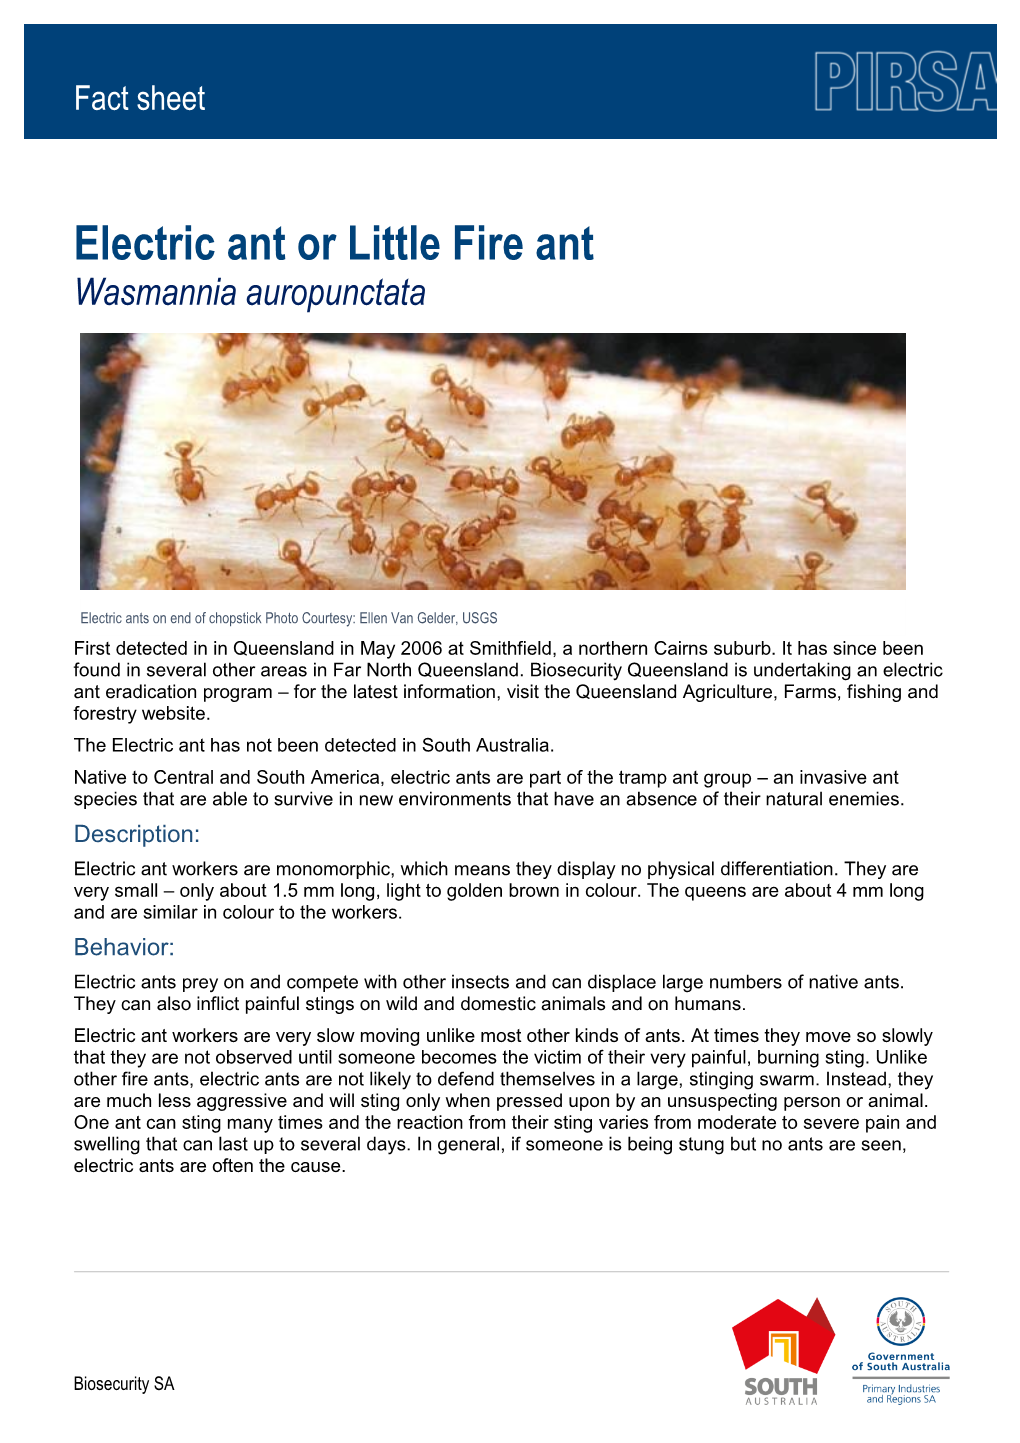 Electric Ant Or Little Fire Ant Wasmannia Auropunctata